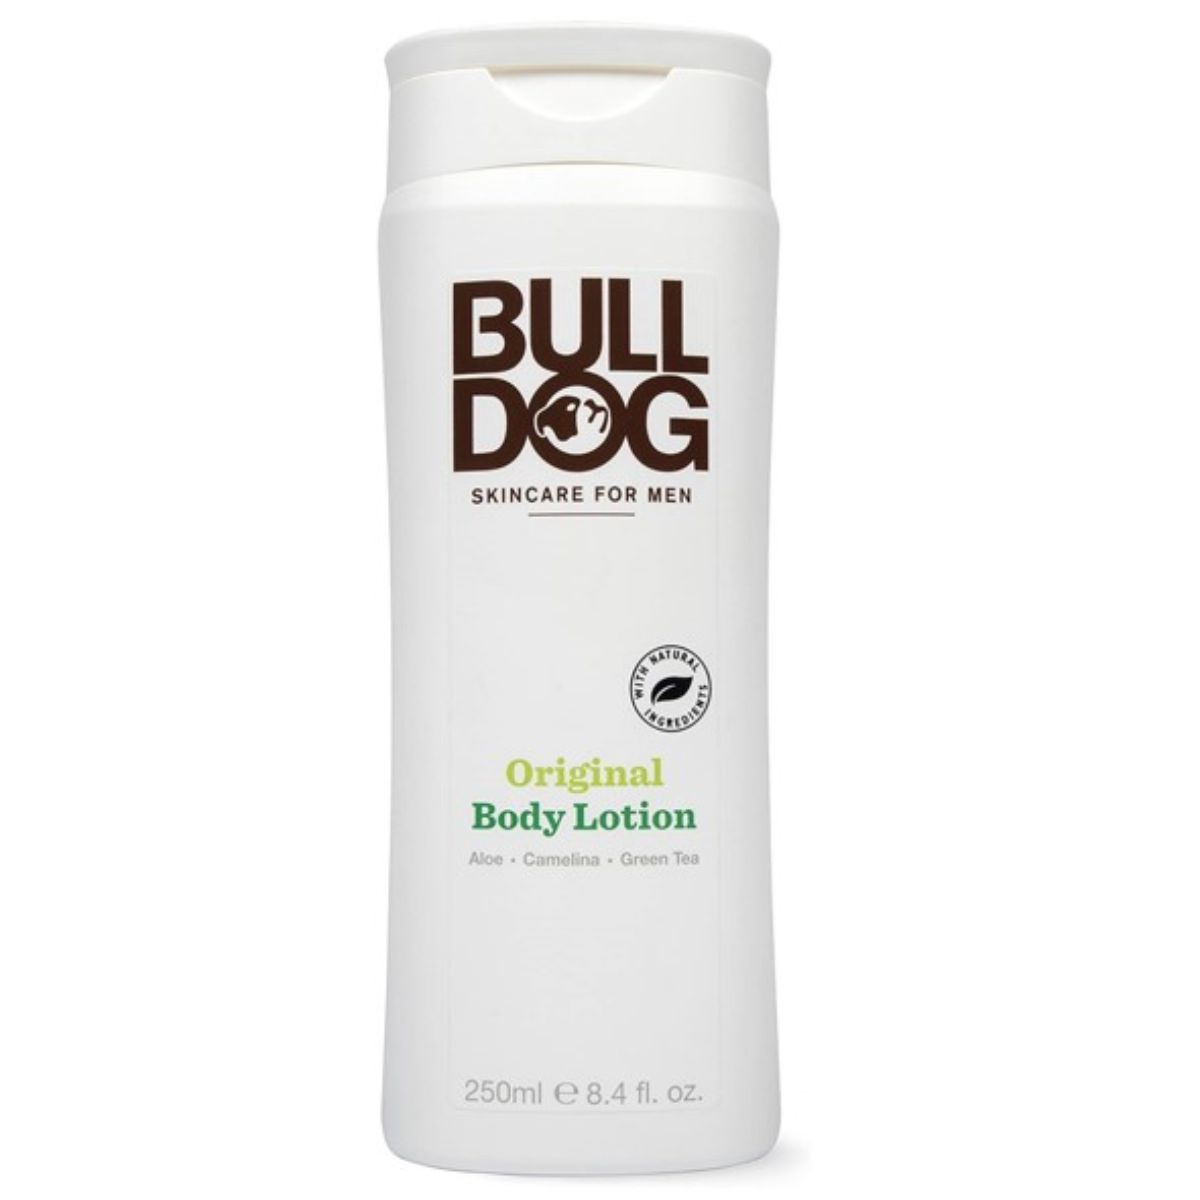 Bulldog Skincare for Men Original Body Lotion 200ml